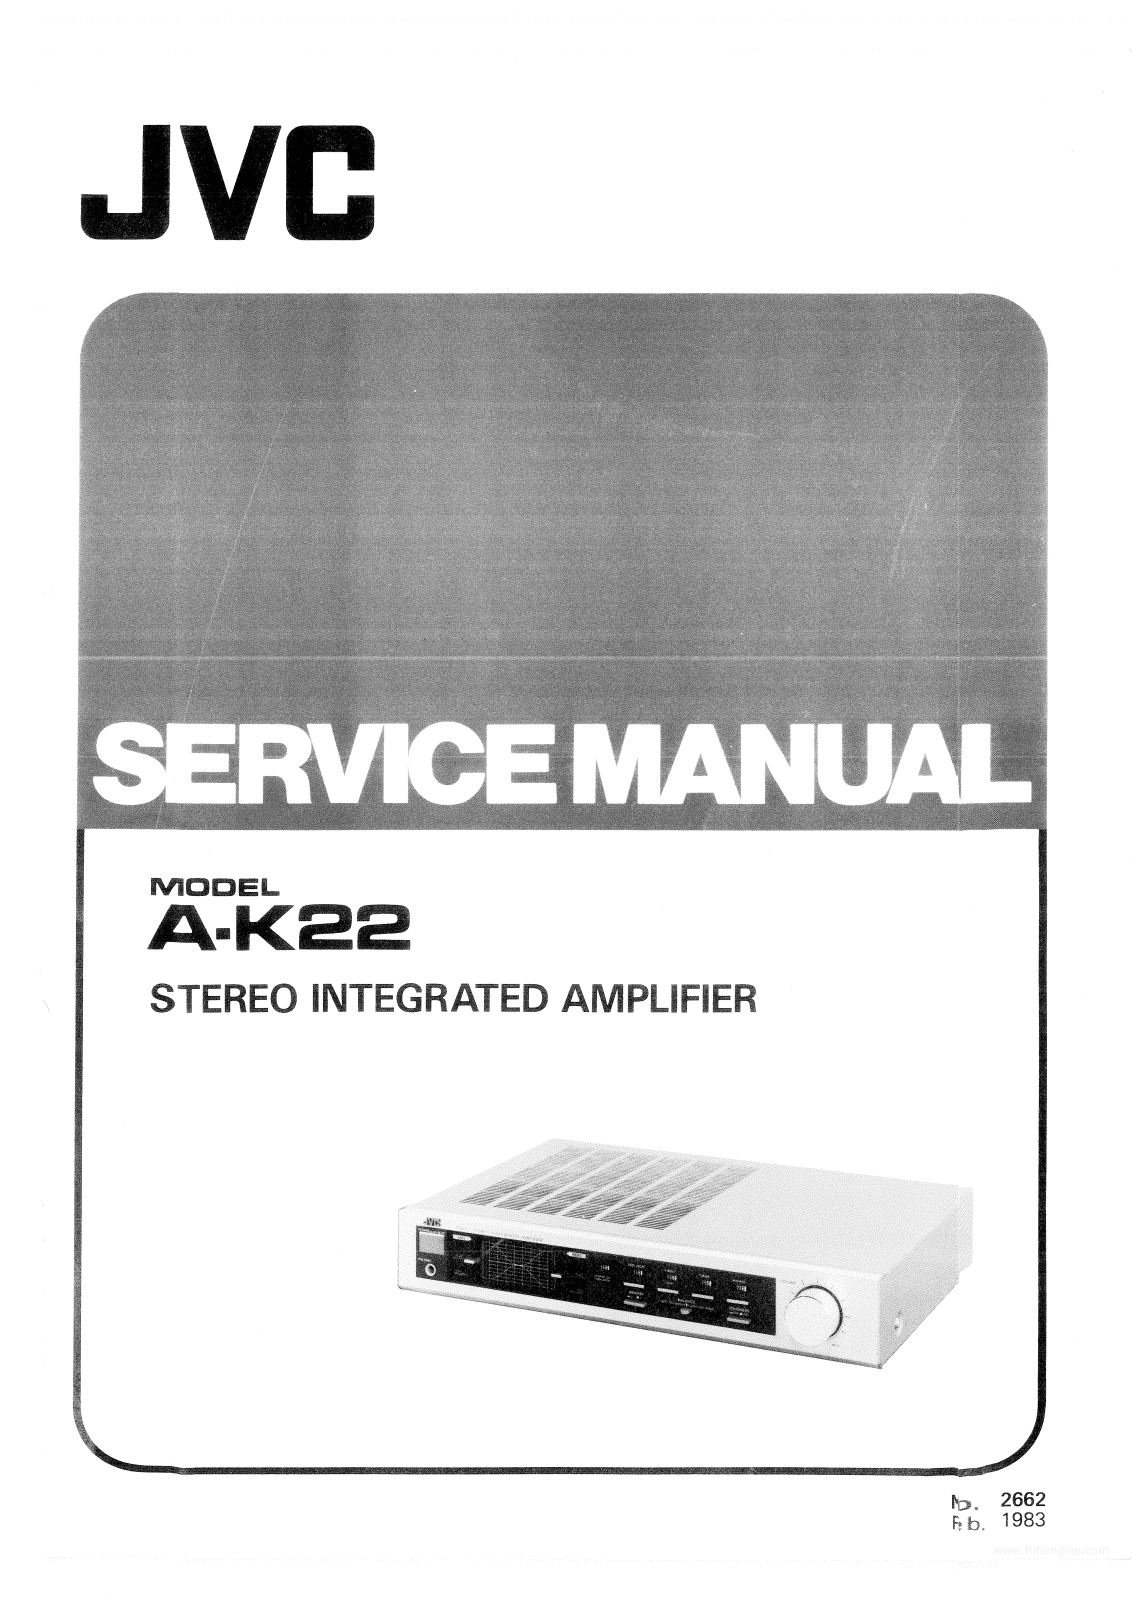 Jvc A-K22 Service Manual